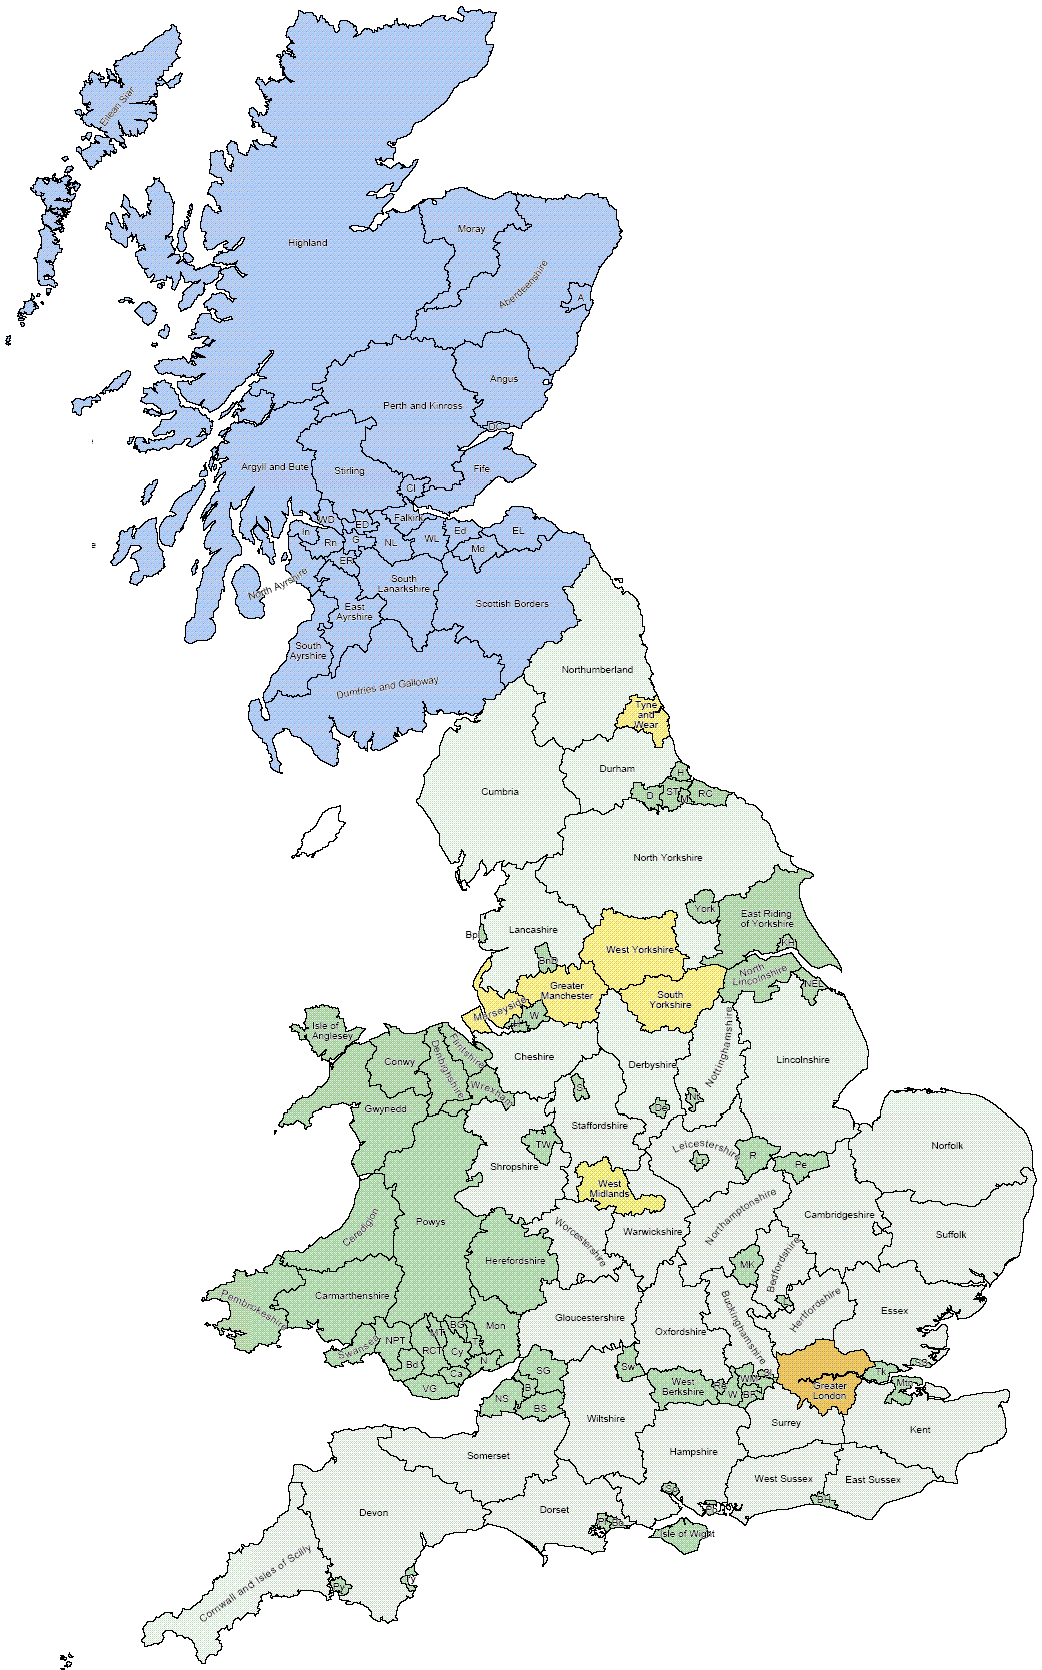 counties-in-uk-mapsof-net